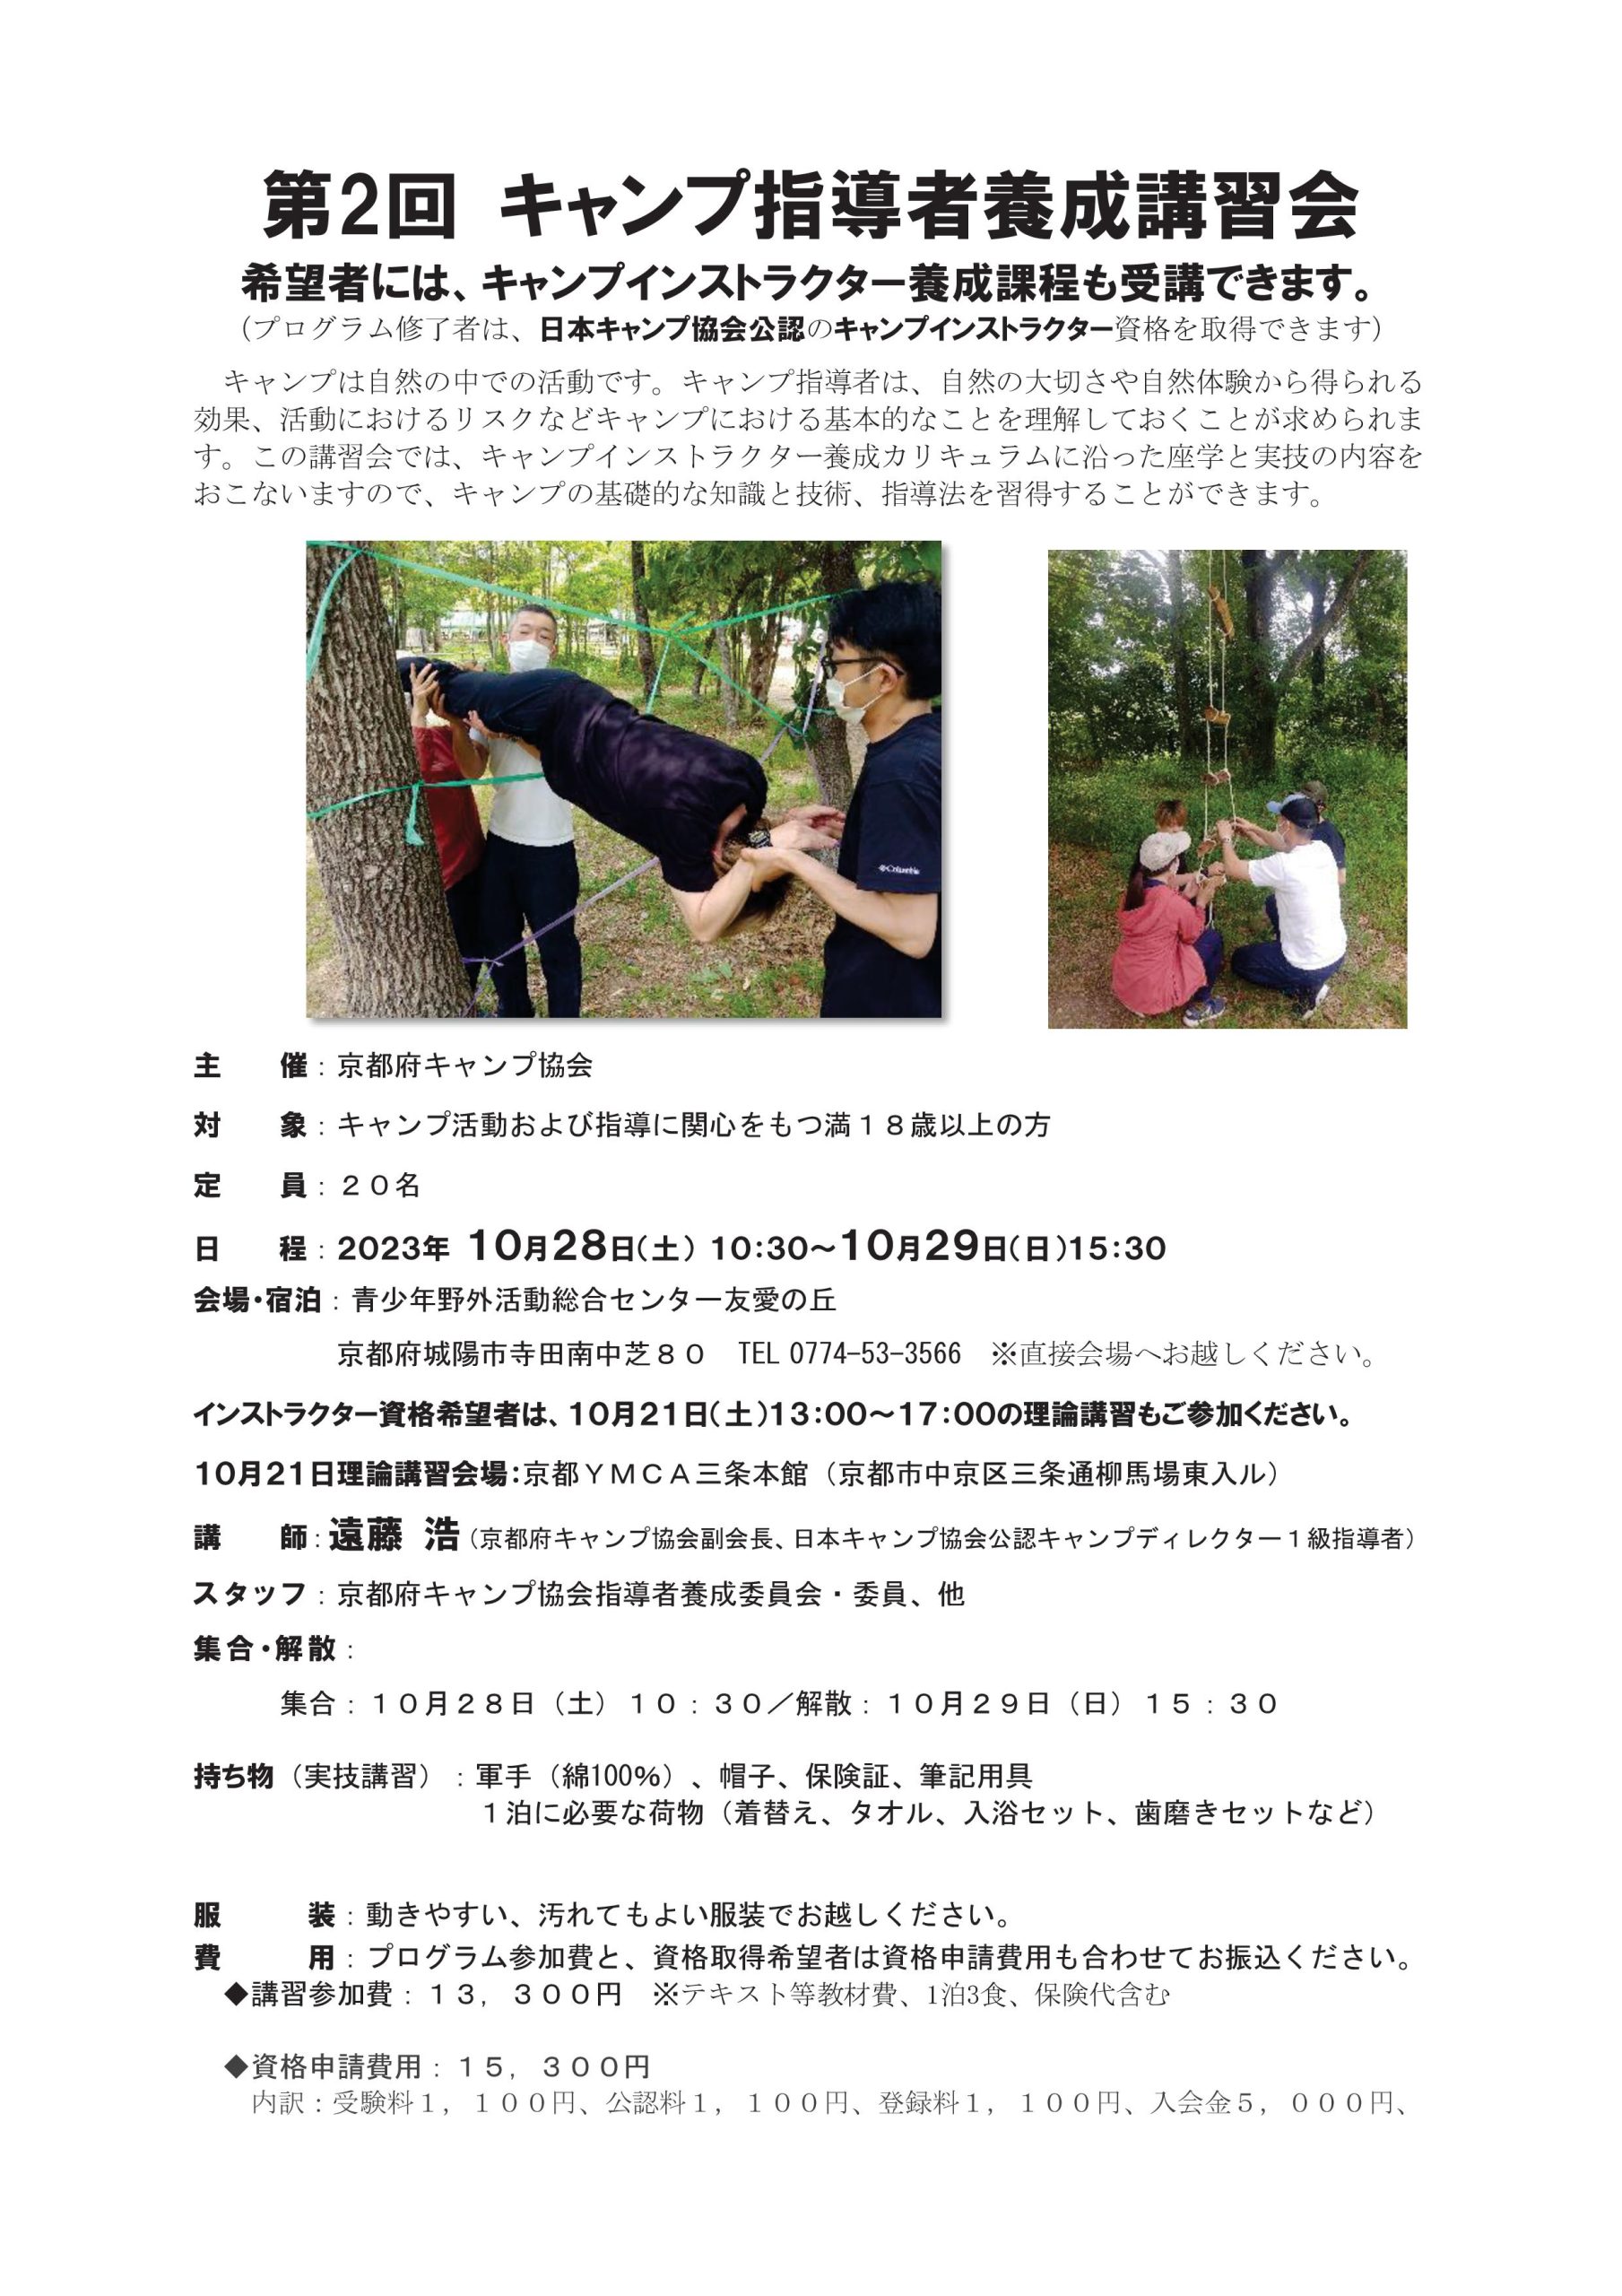 京都：キャンプ指導者養成講習会（10/21・10/28～29） @ 京都YMCA三条本館